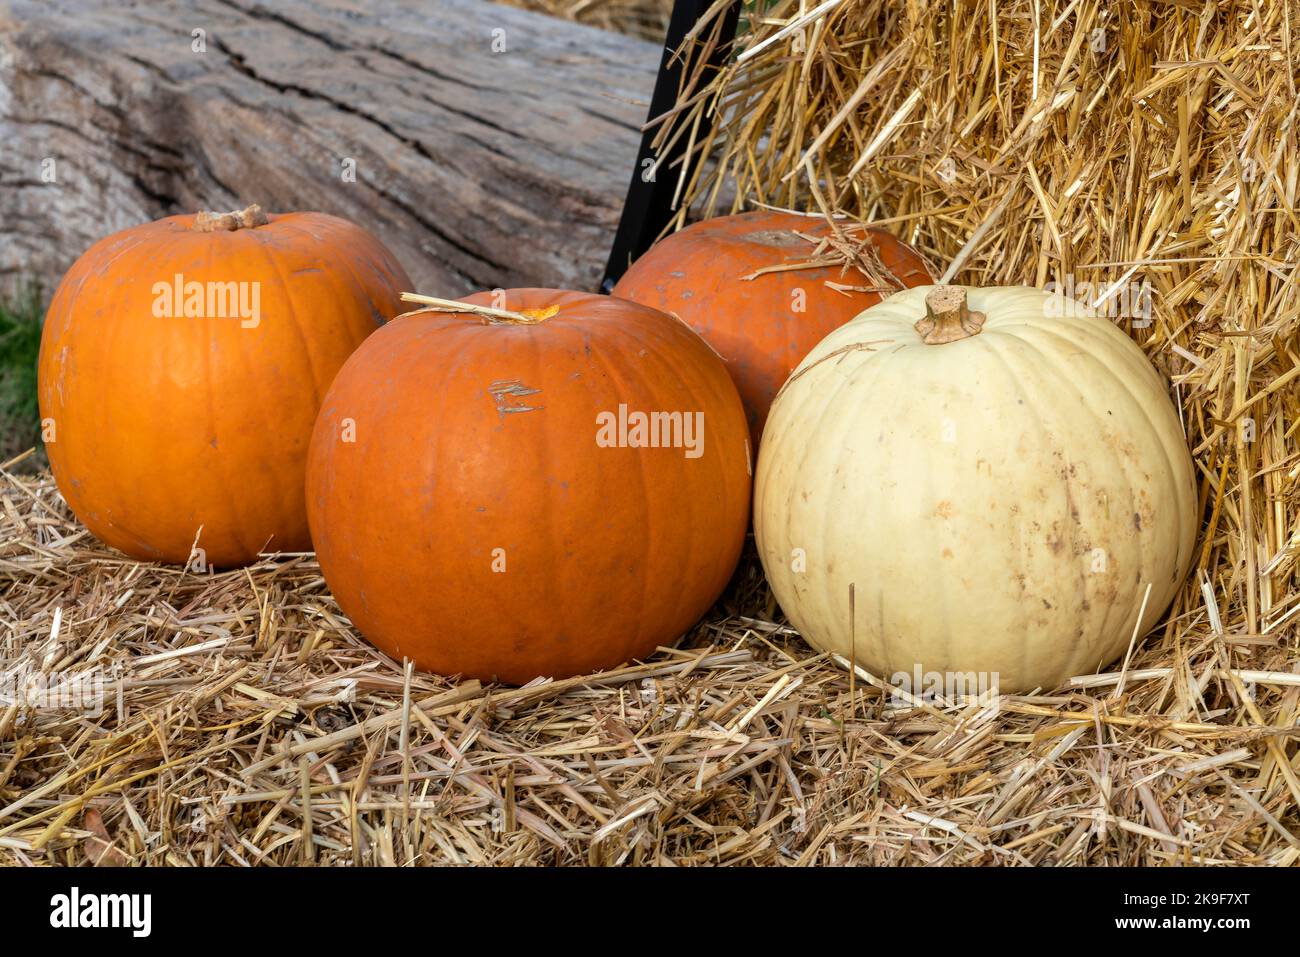 Pumpkin (cucurbita) an orange or white winter vegetable squash used for a Halloween display, stock photo image Stock Photo